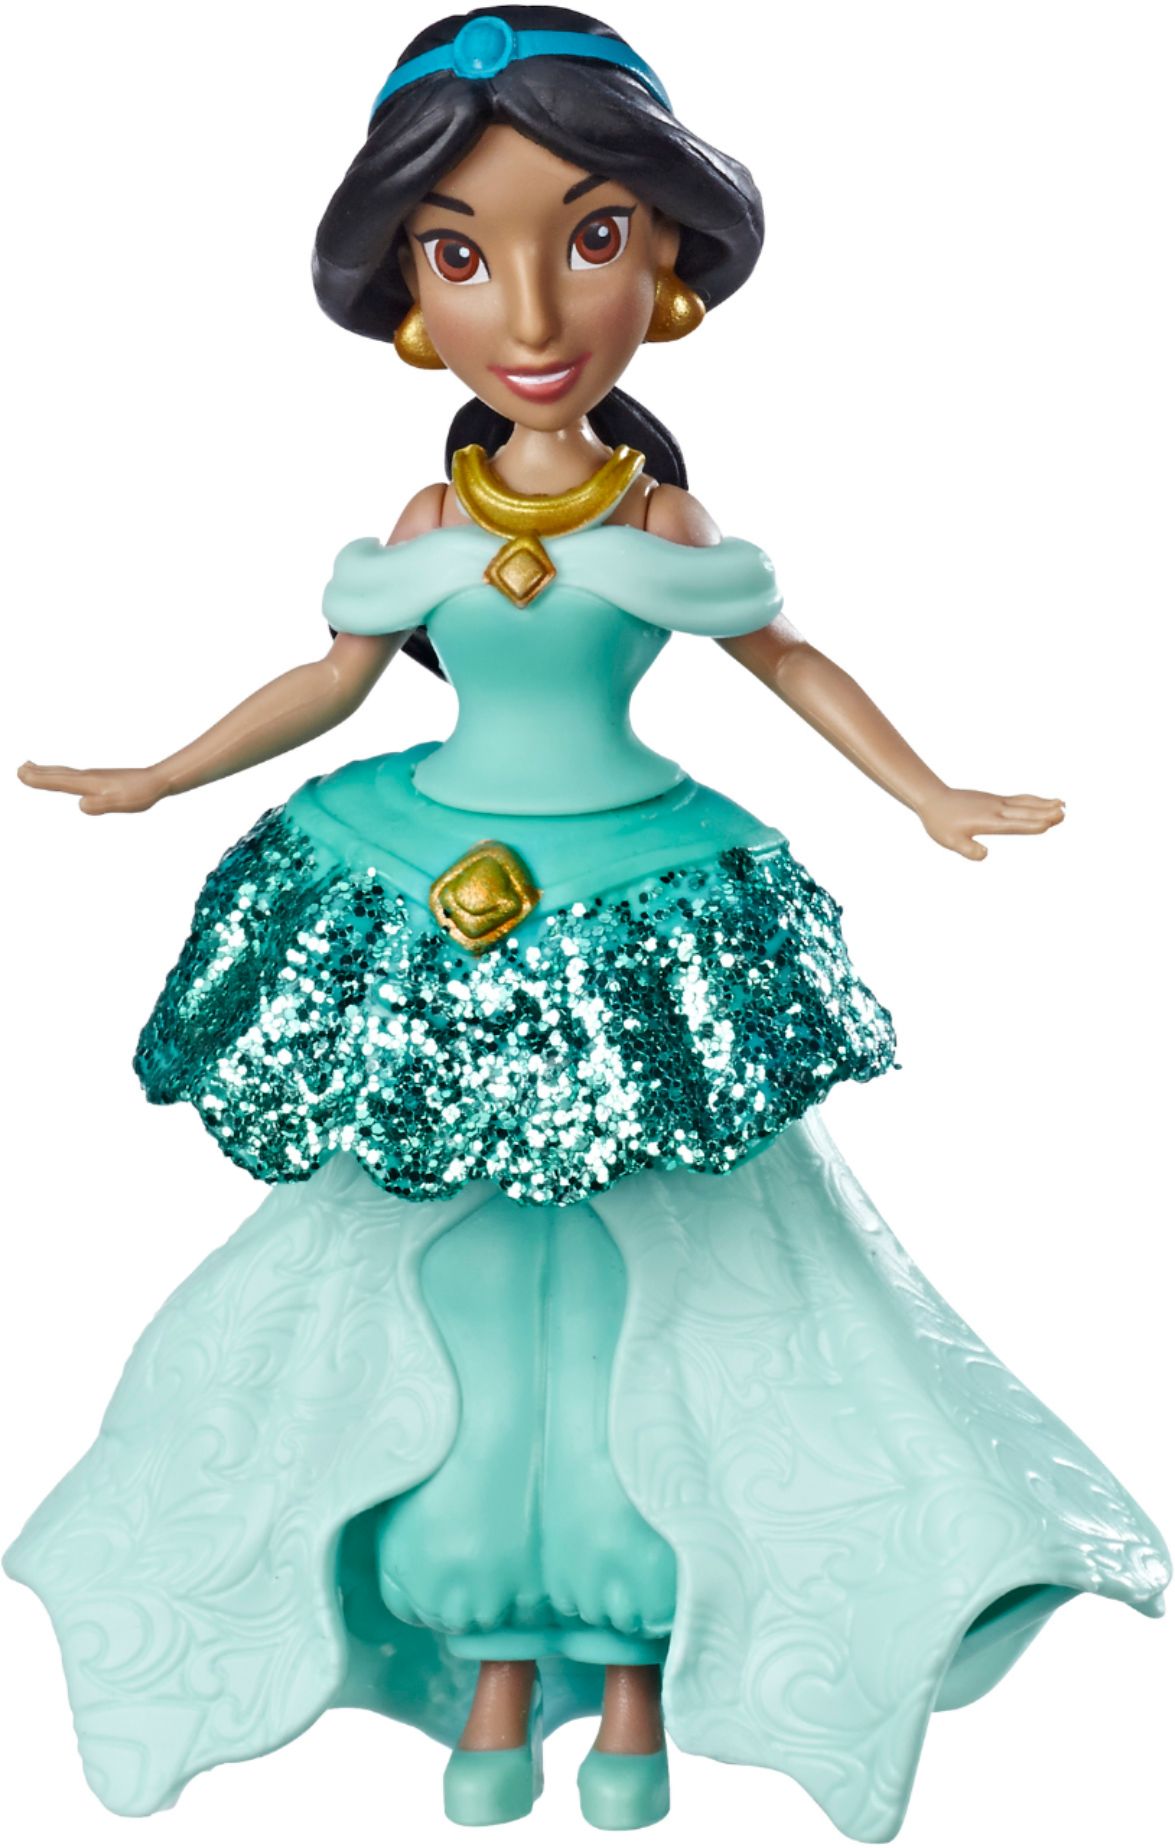 disney princess figures with removable dresses